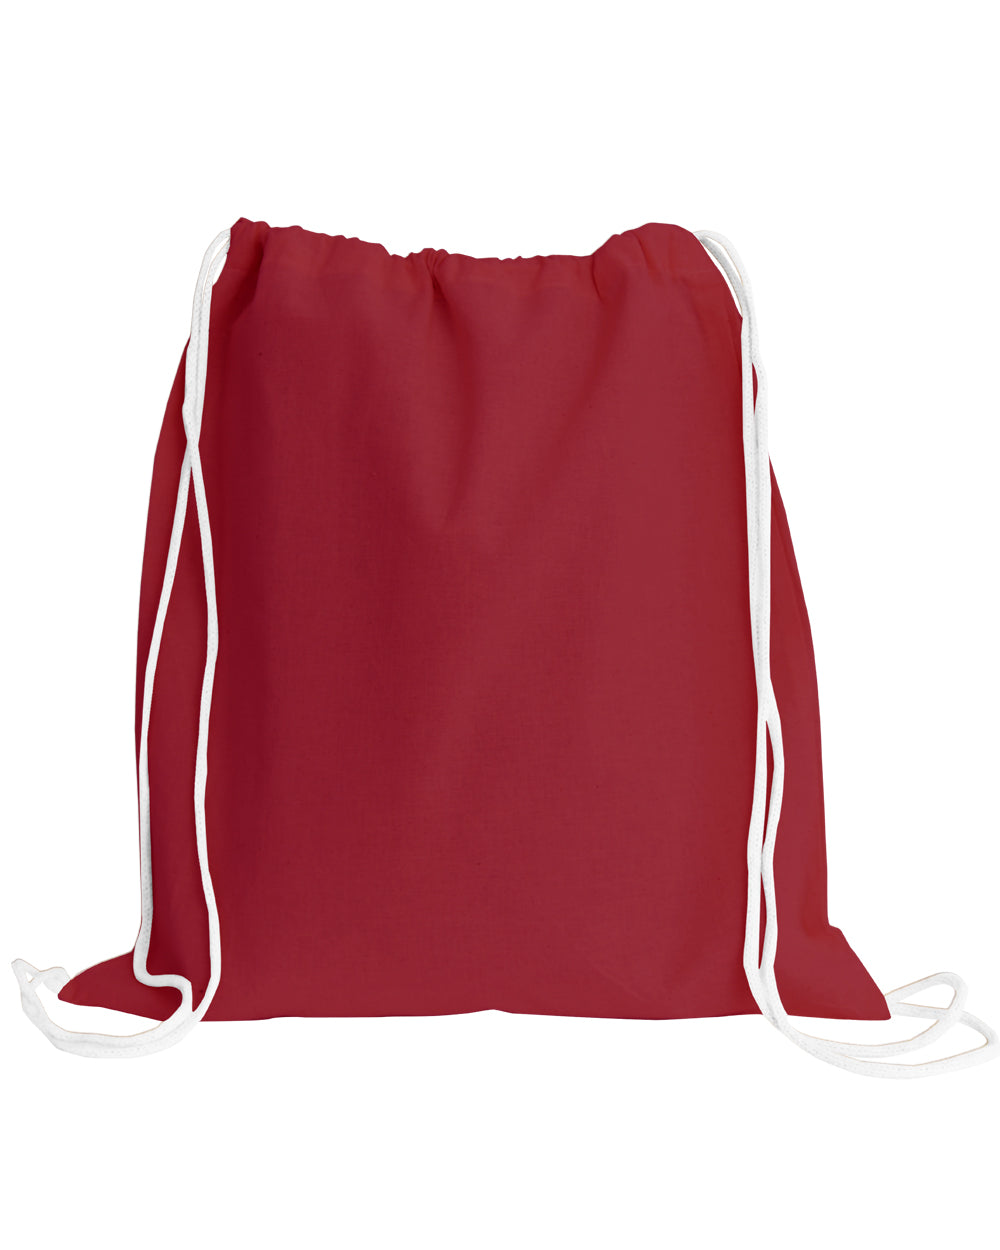 affordable-red-drawstring-backpack